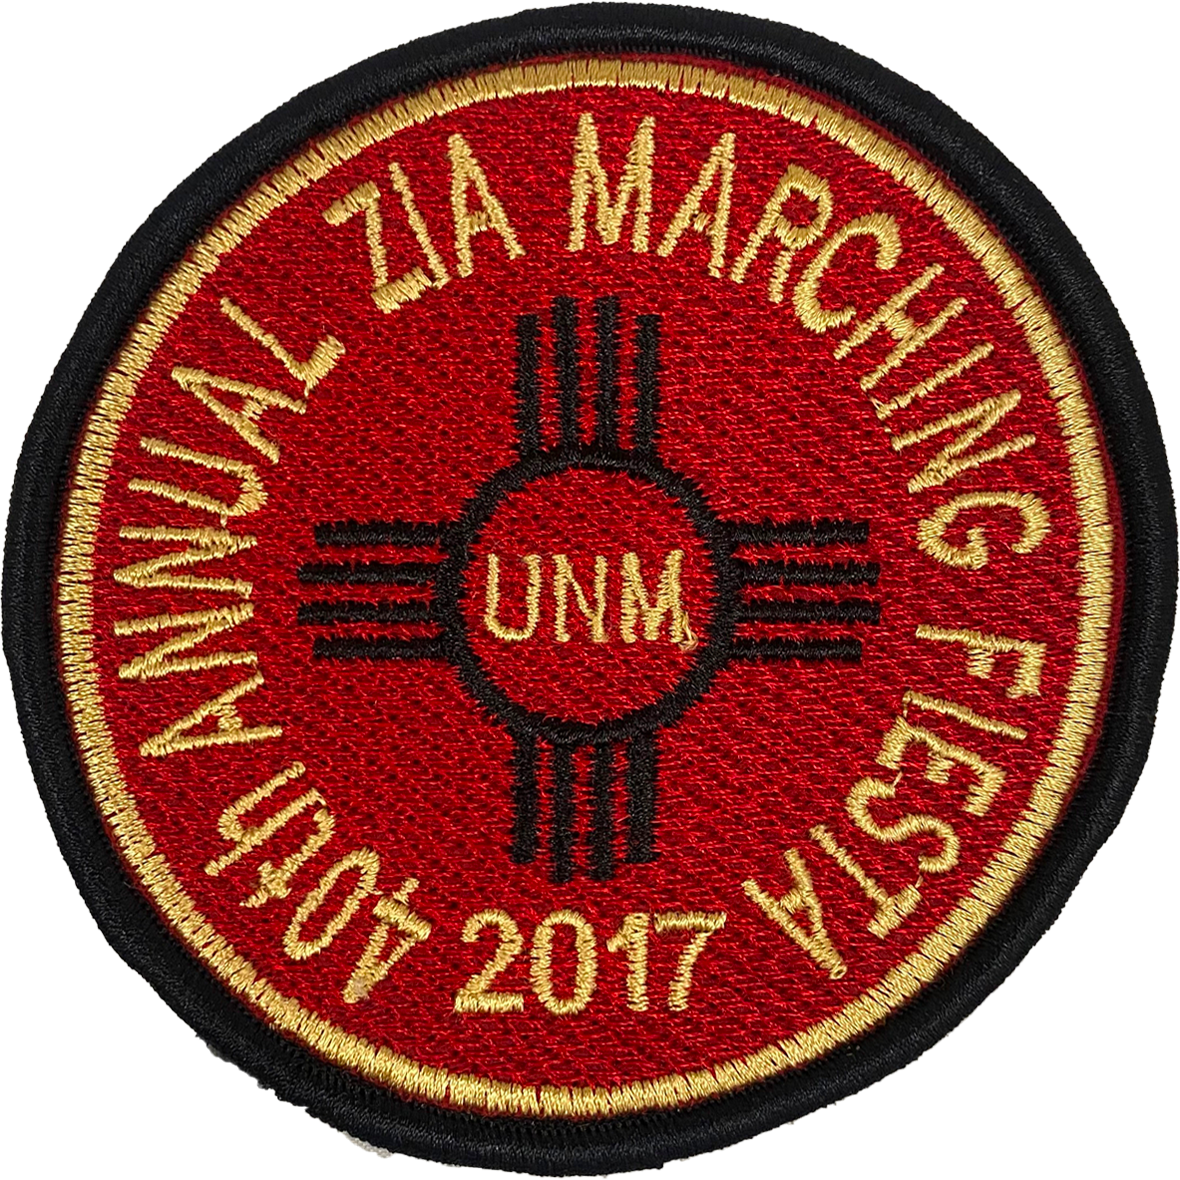 Zia Marching Fiesta 2017 Patch